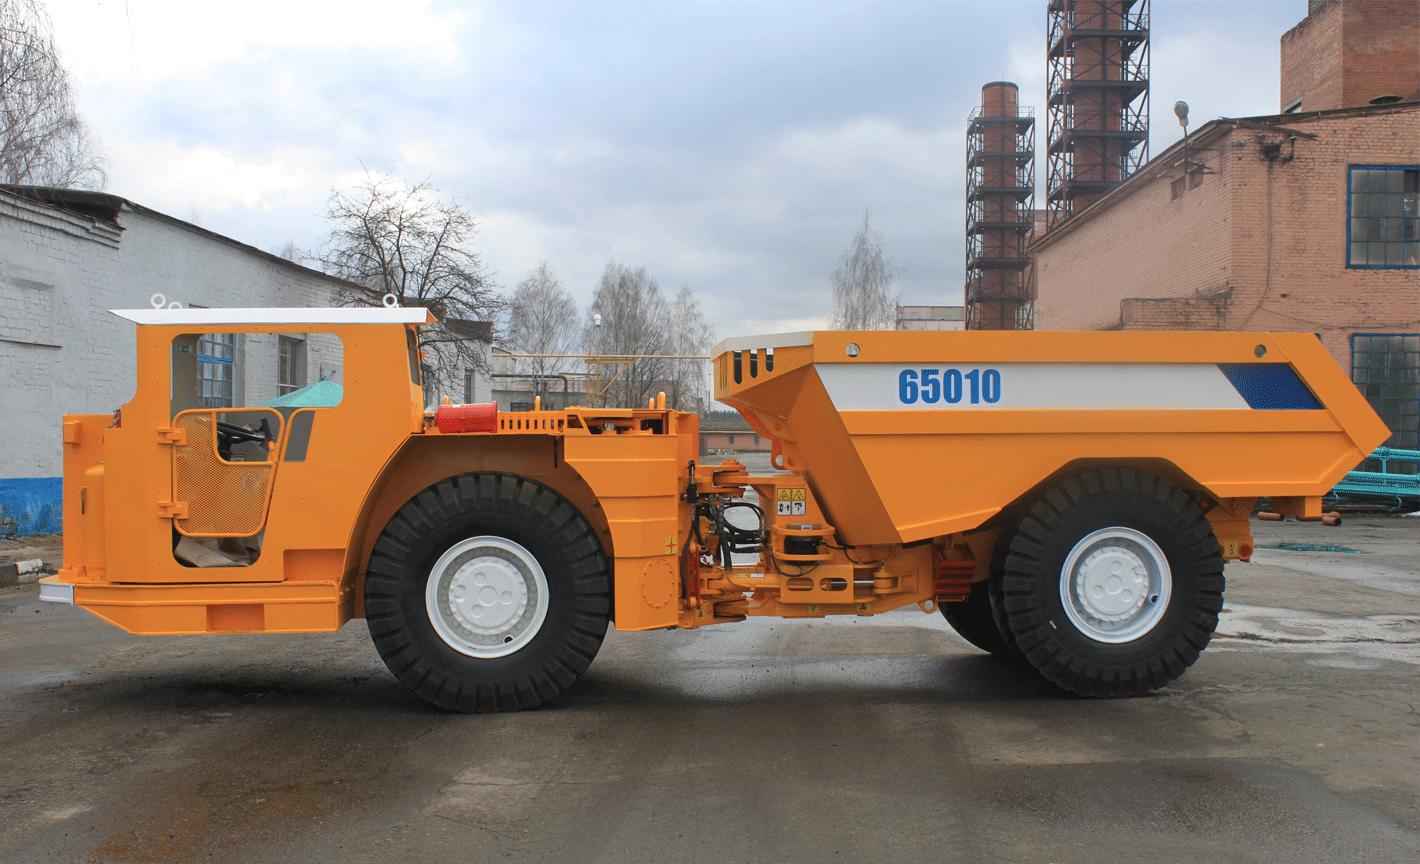 MOAZ-65010 underground mining dump trucks